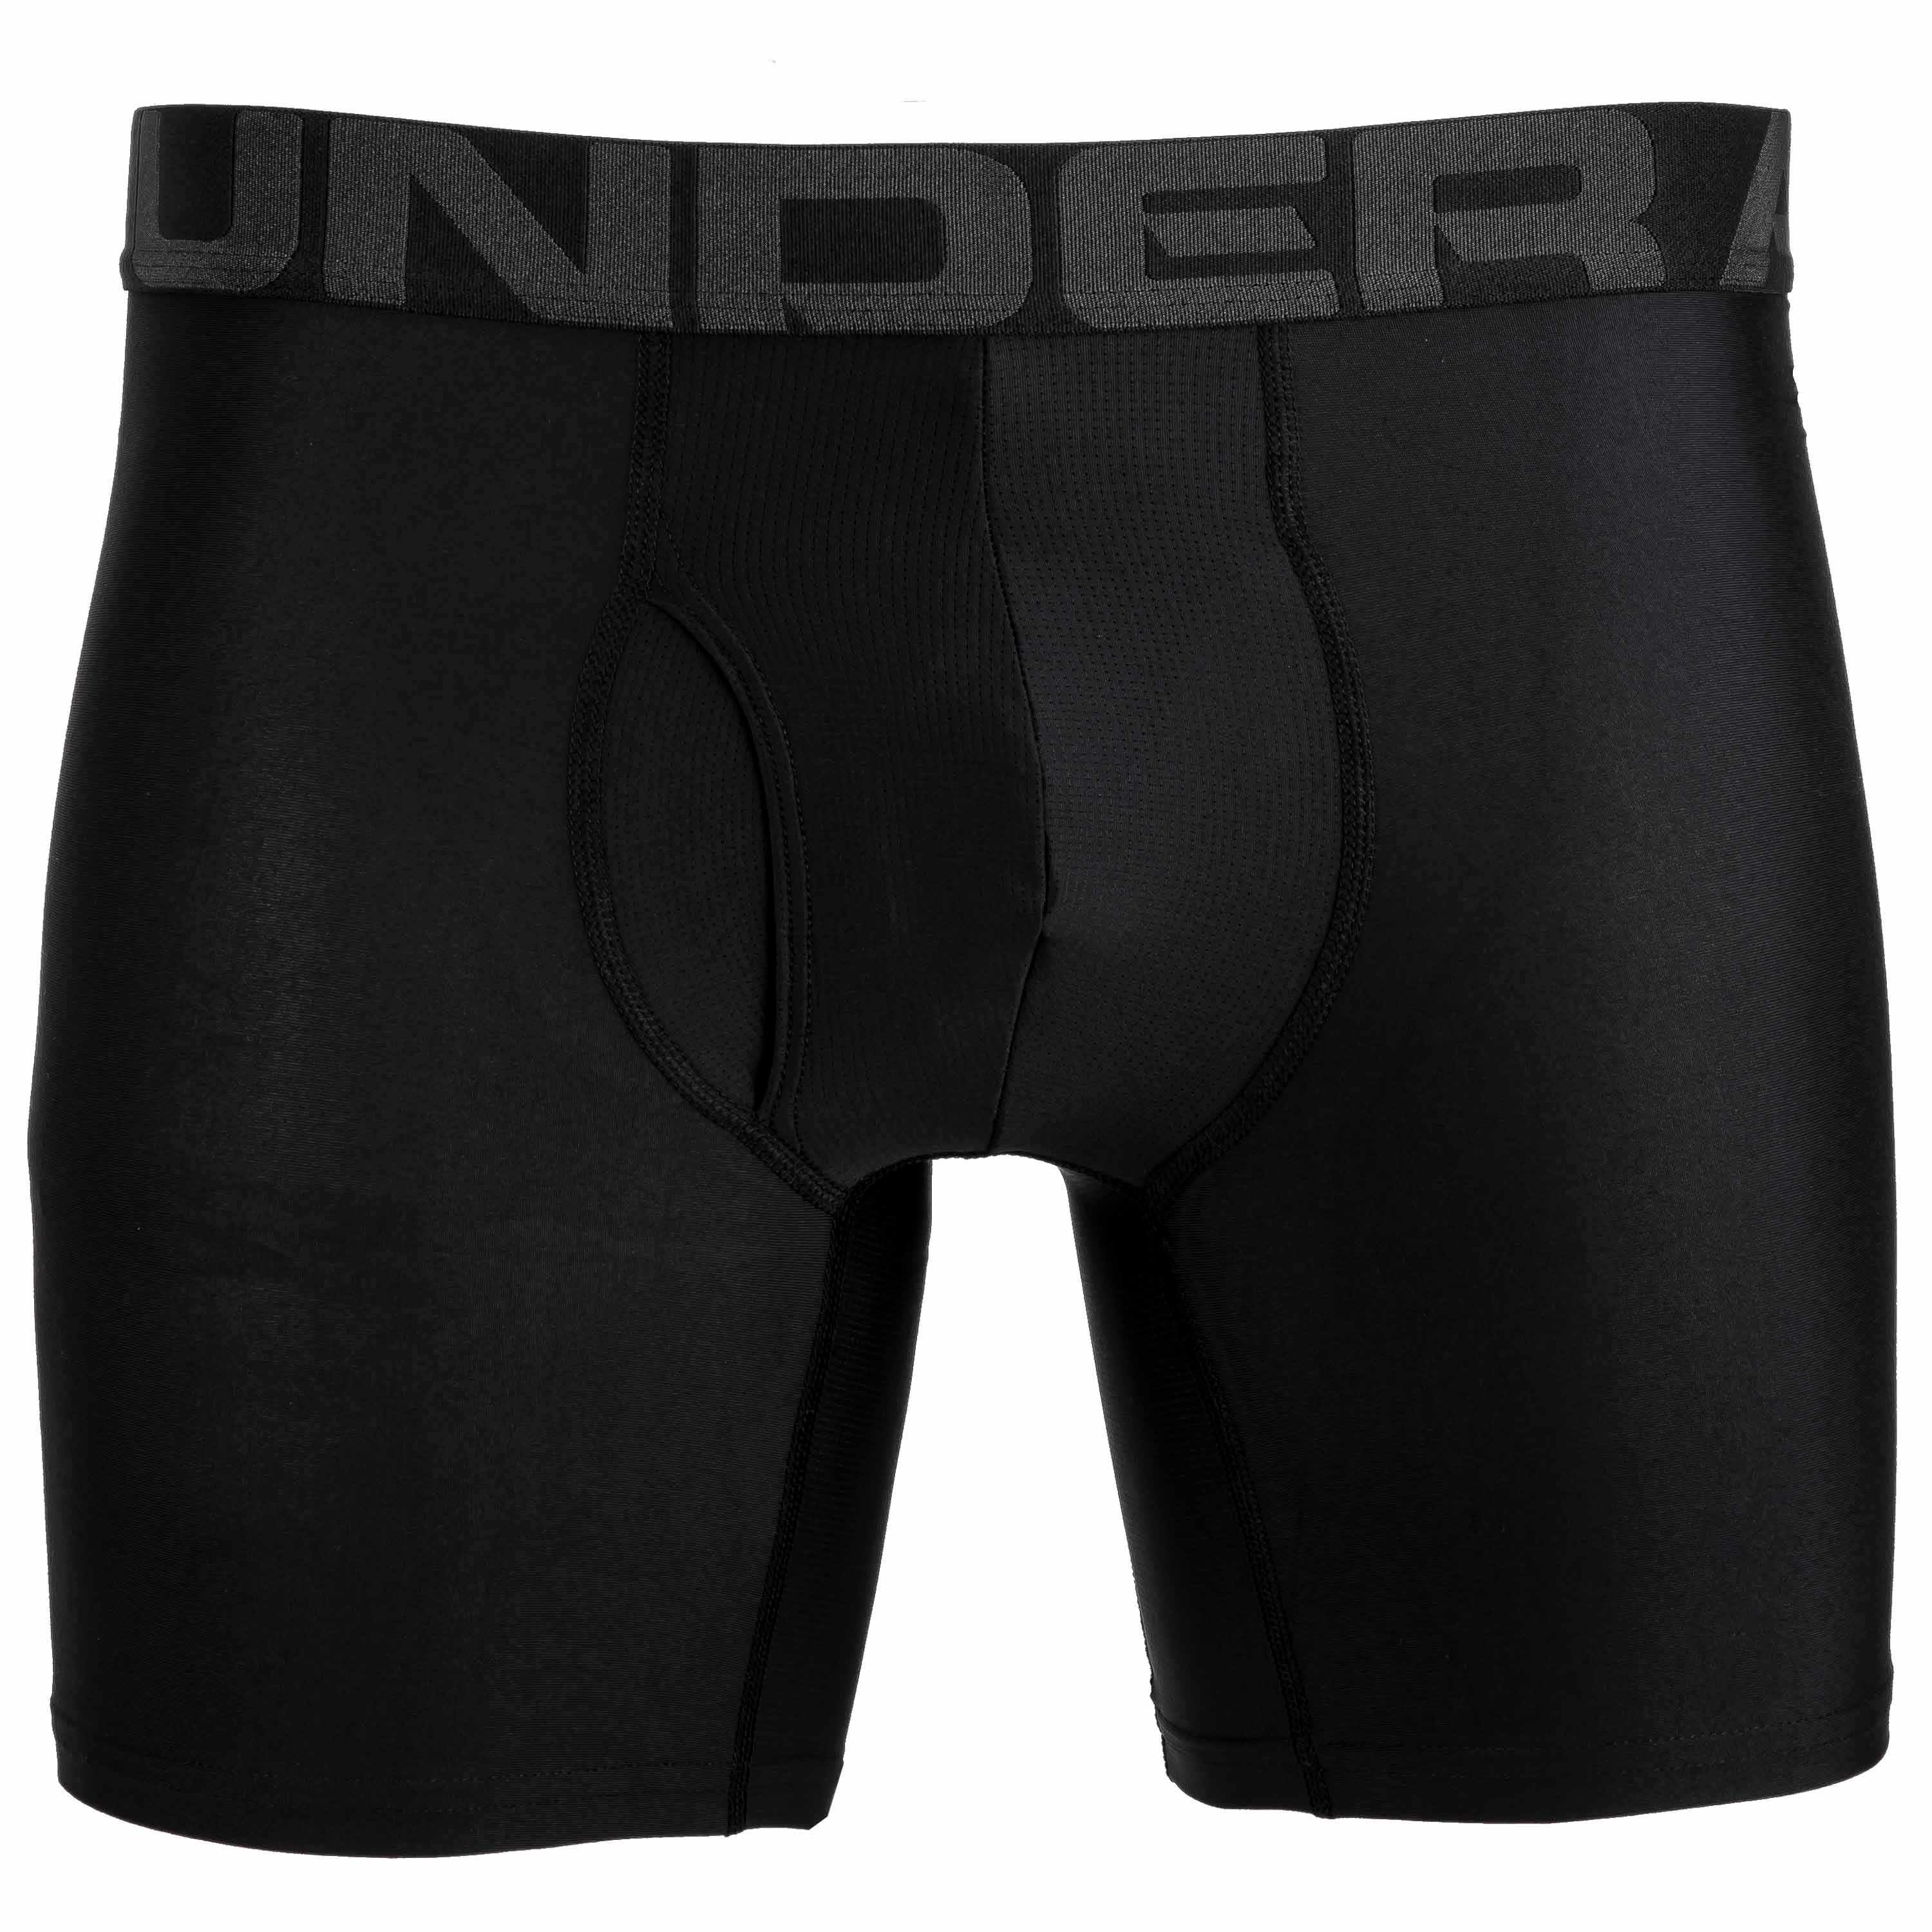 Boxer Short Tech 6 Inch 2-Pack black 